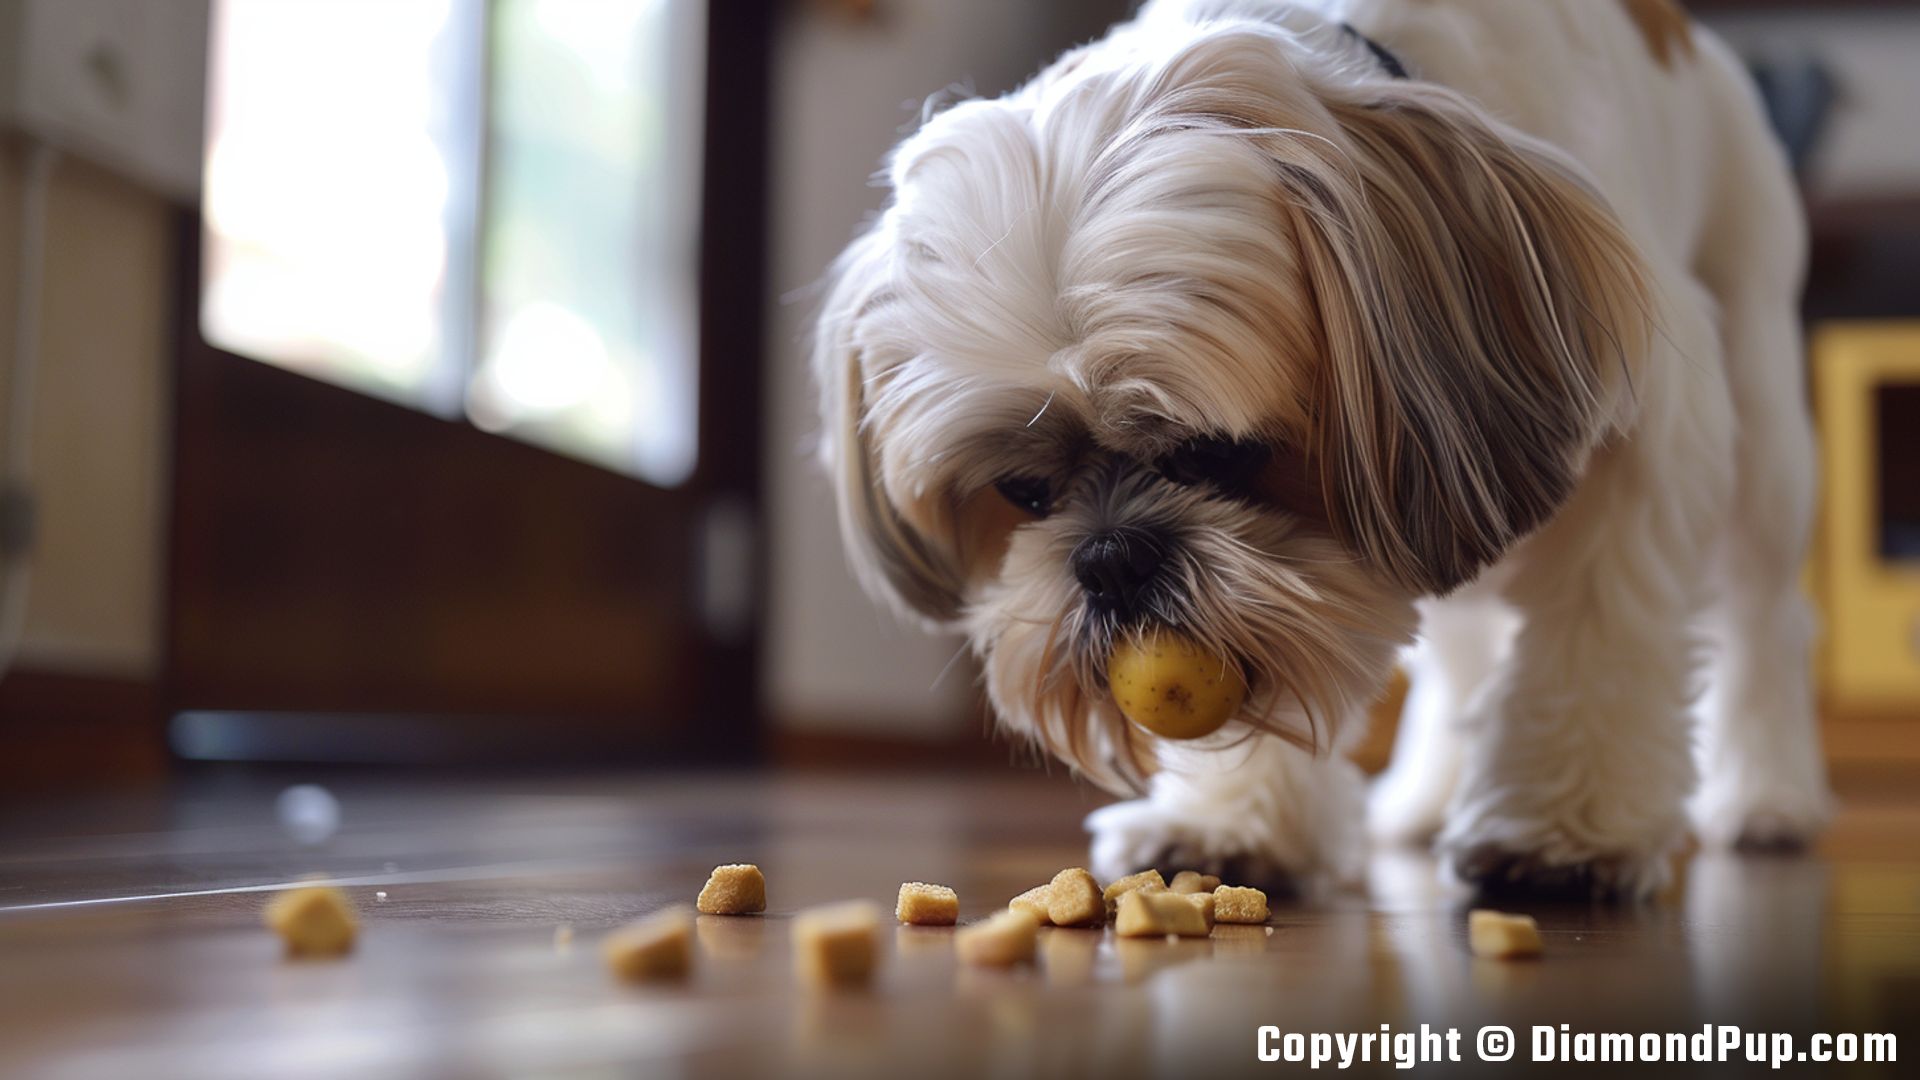 Photo of a Cute Shih Tzu Snacking on Potato